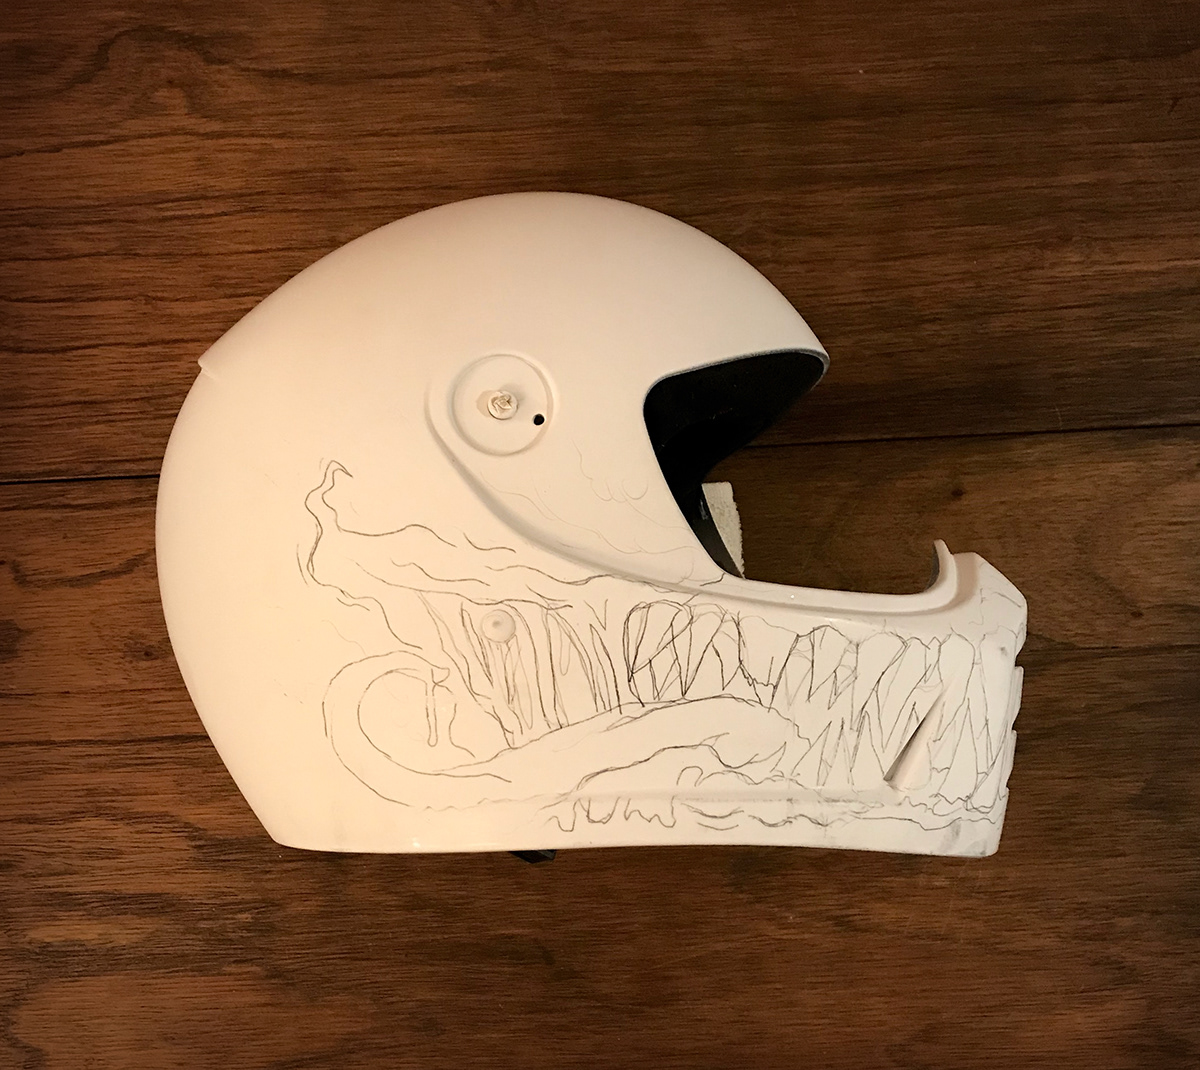 Helmet motorcicle motorbike motocicleta kustom culture custom Custom ilustrador argentina Graphic Designer